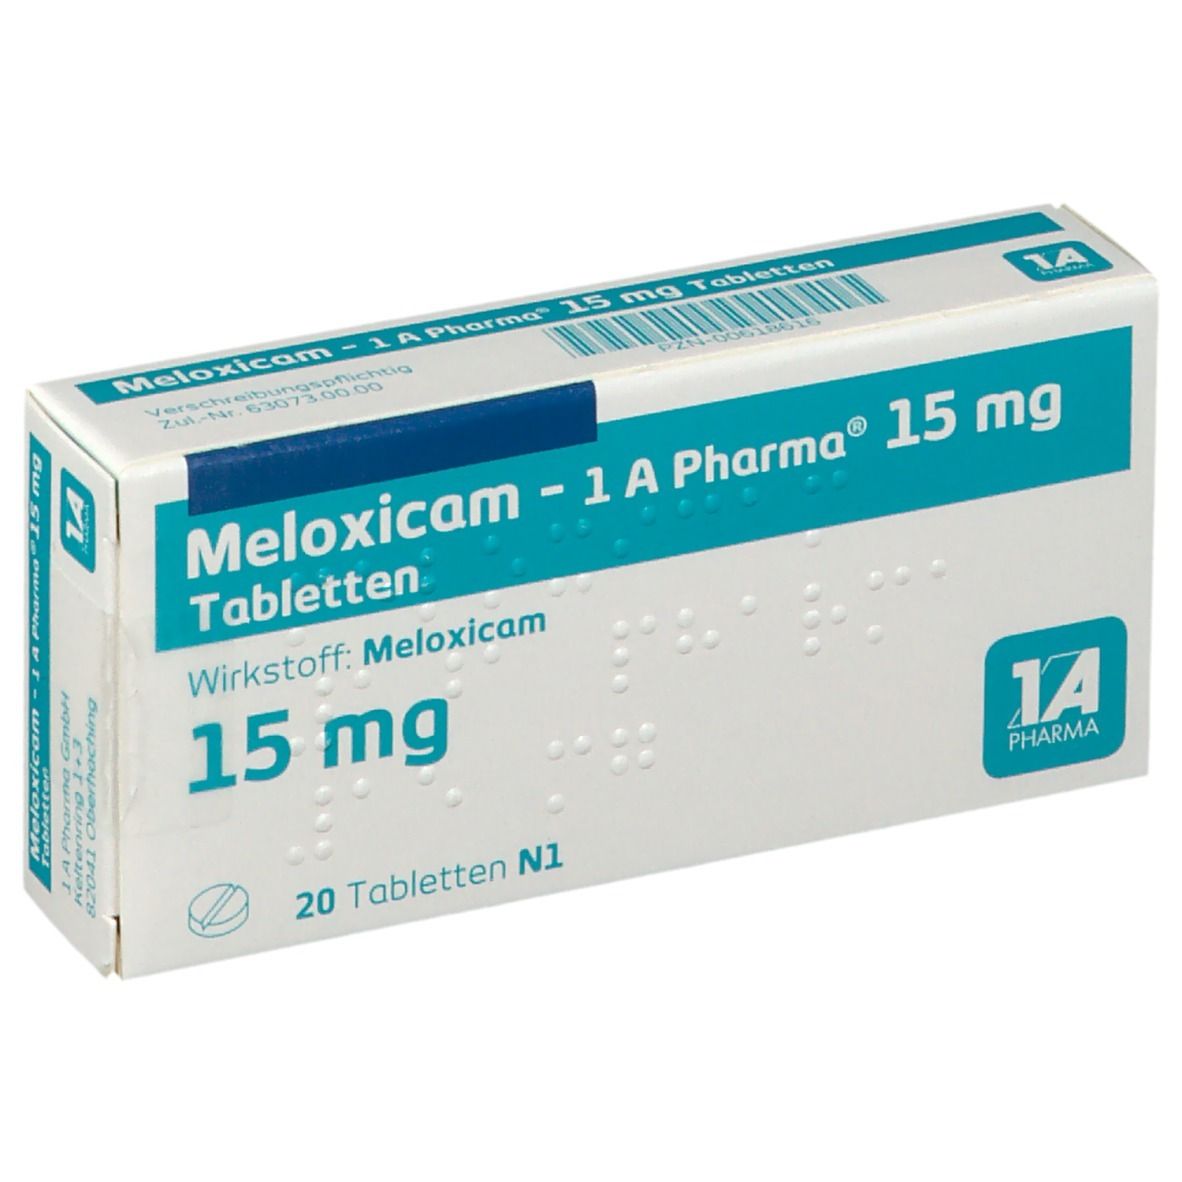 Meloxicam - 1 A Pharma® 15 mg